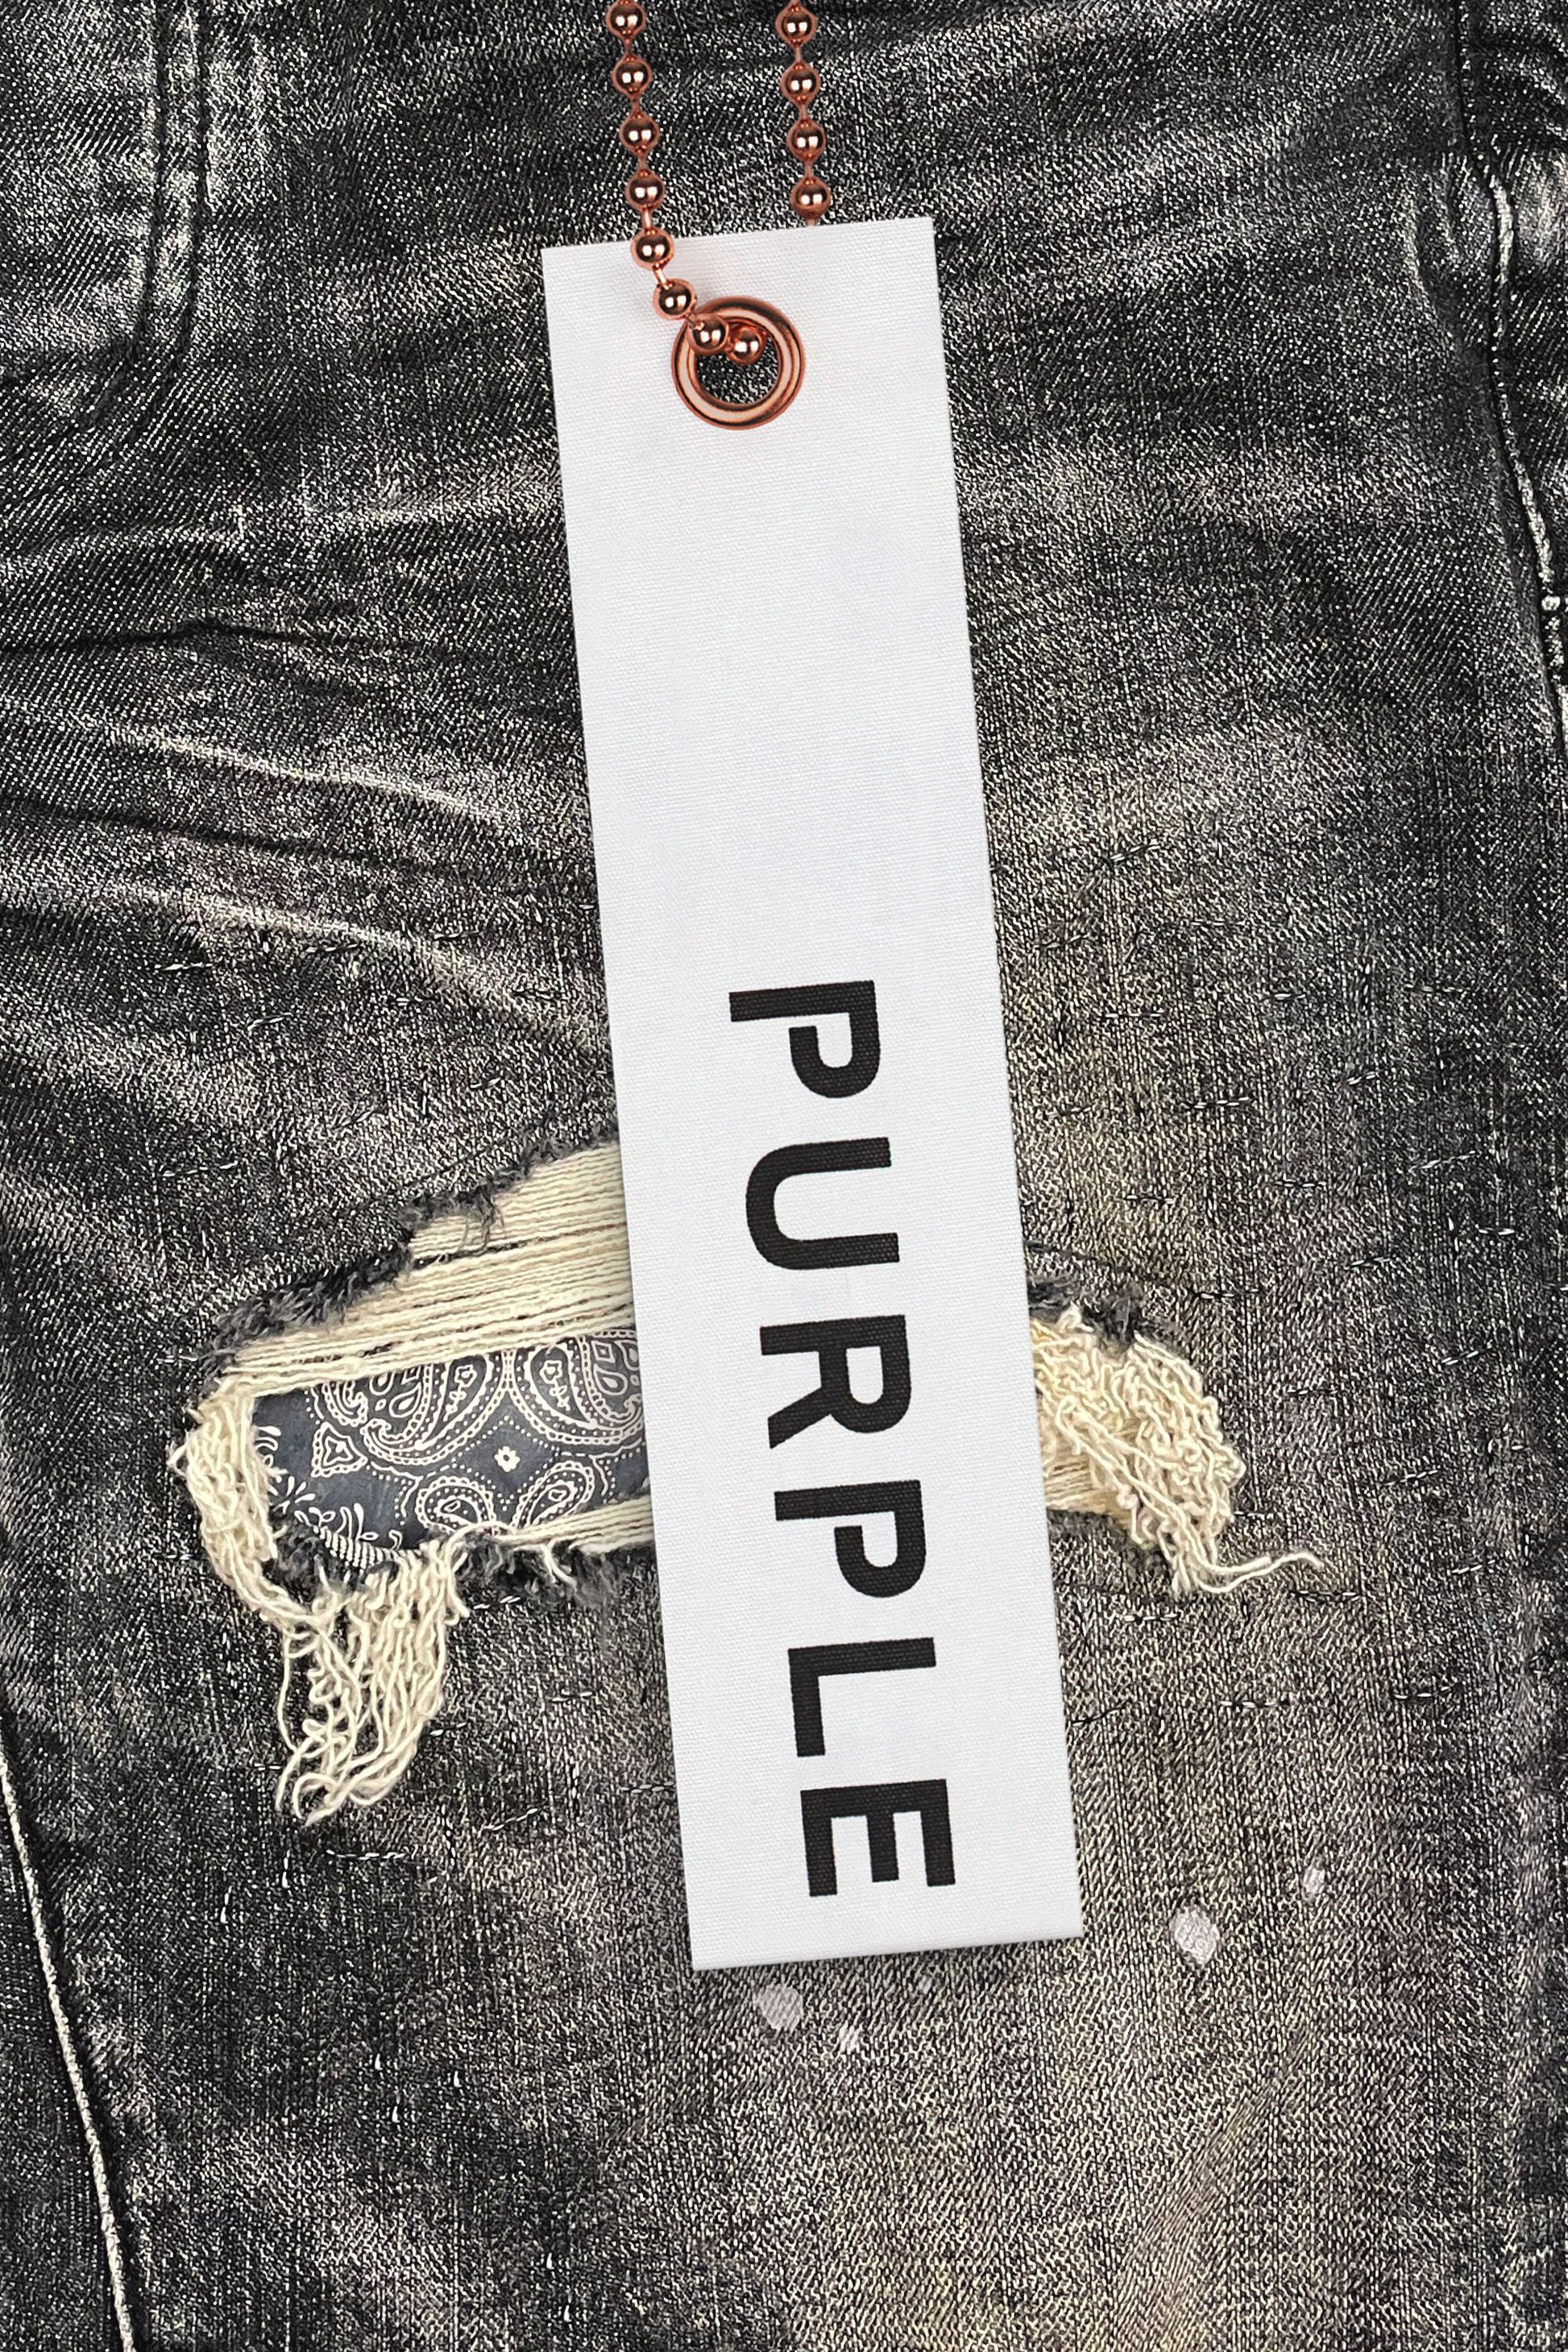 PURPLE BRAND - Men's Denim Jean - Mid Rise Slim - Style No. P002 - Bandana Patch Pocket Grey - Hangtag